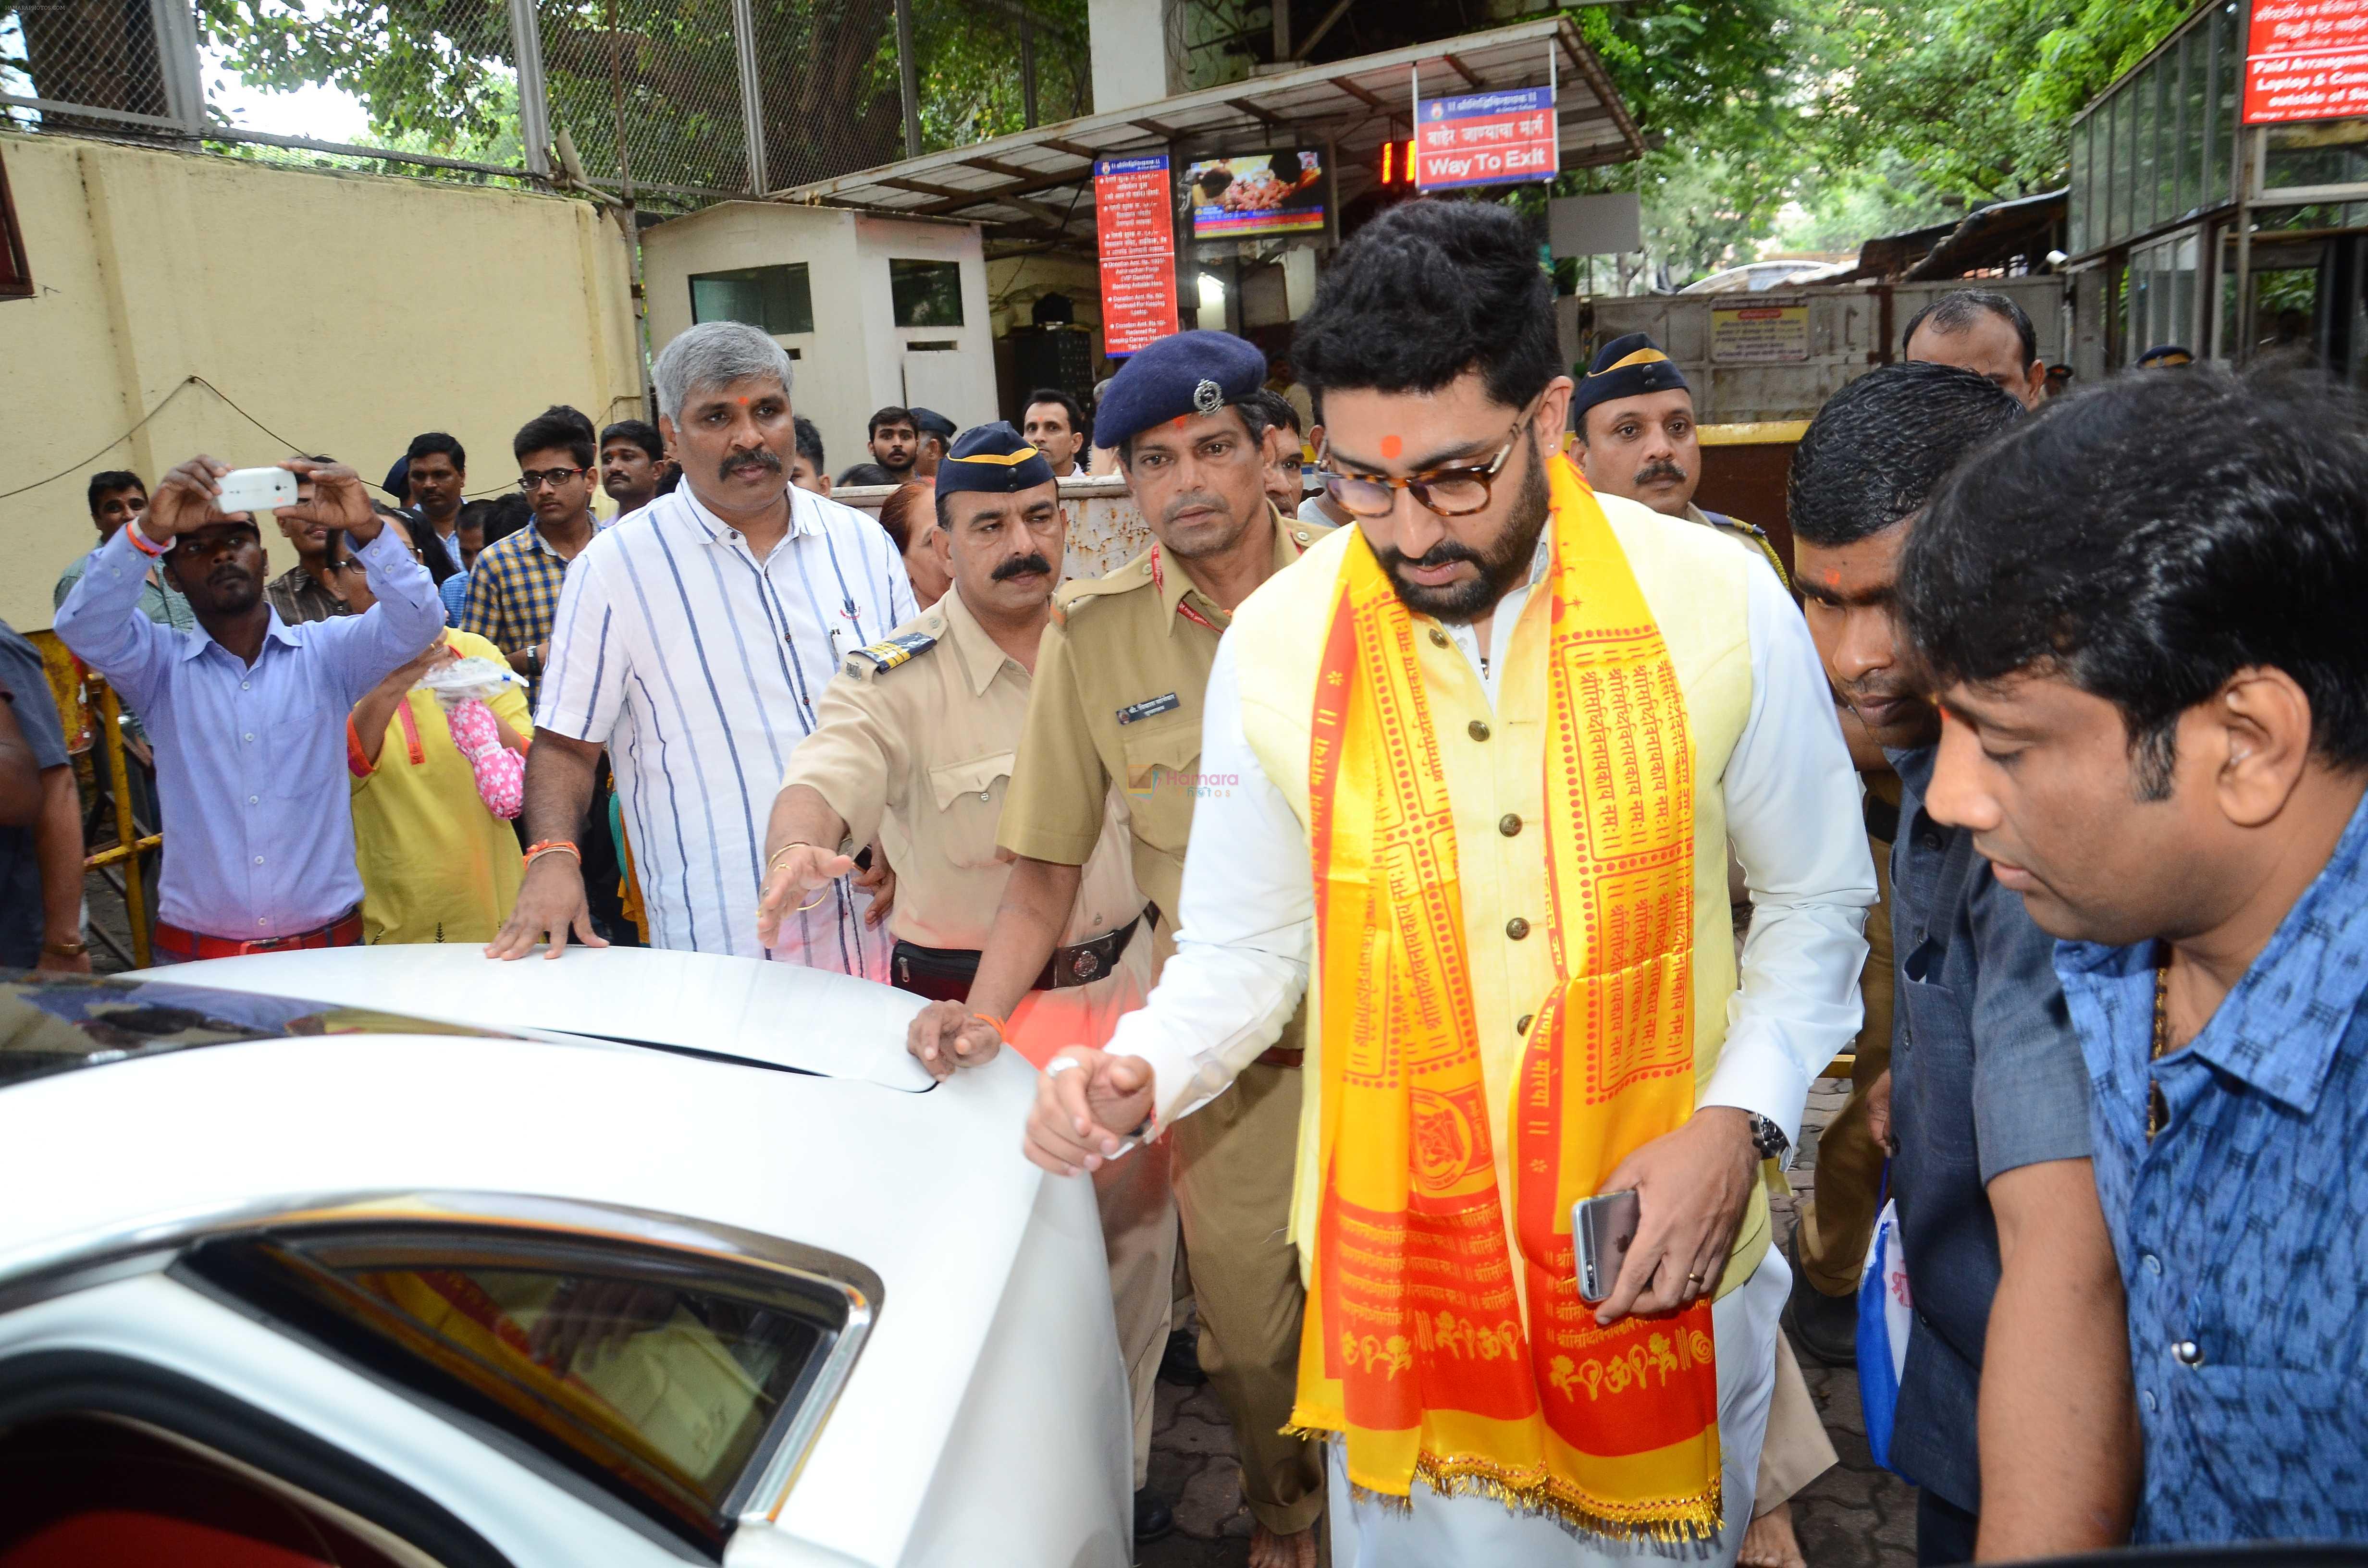 Abhishek Bachchan visits Siddhivinayak Temple, Mumbai on July 20, 2016